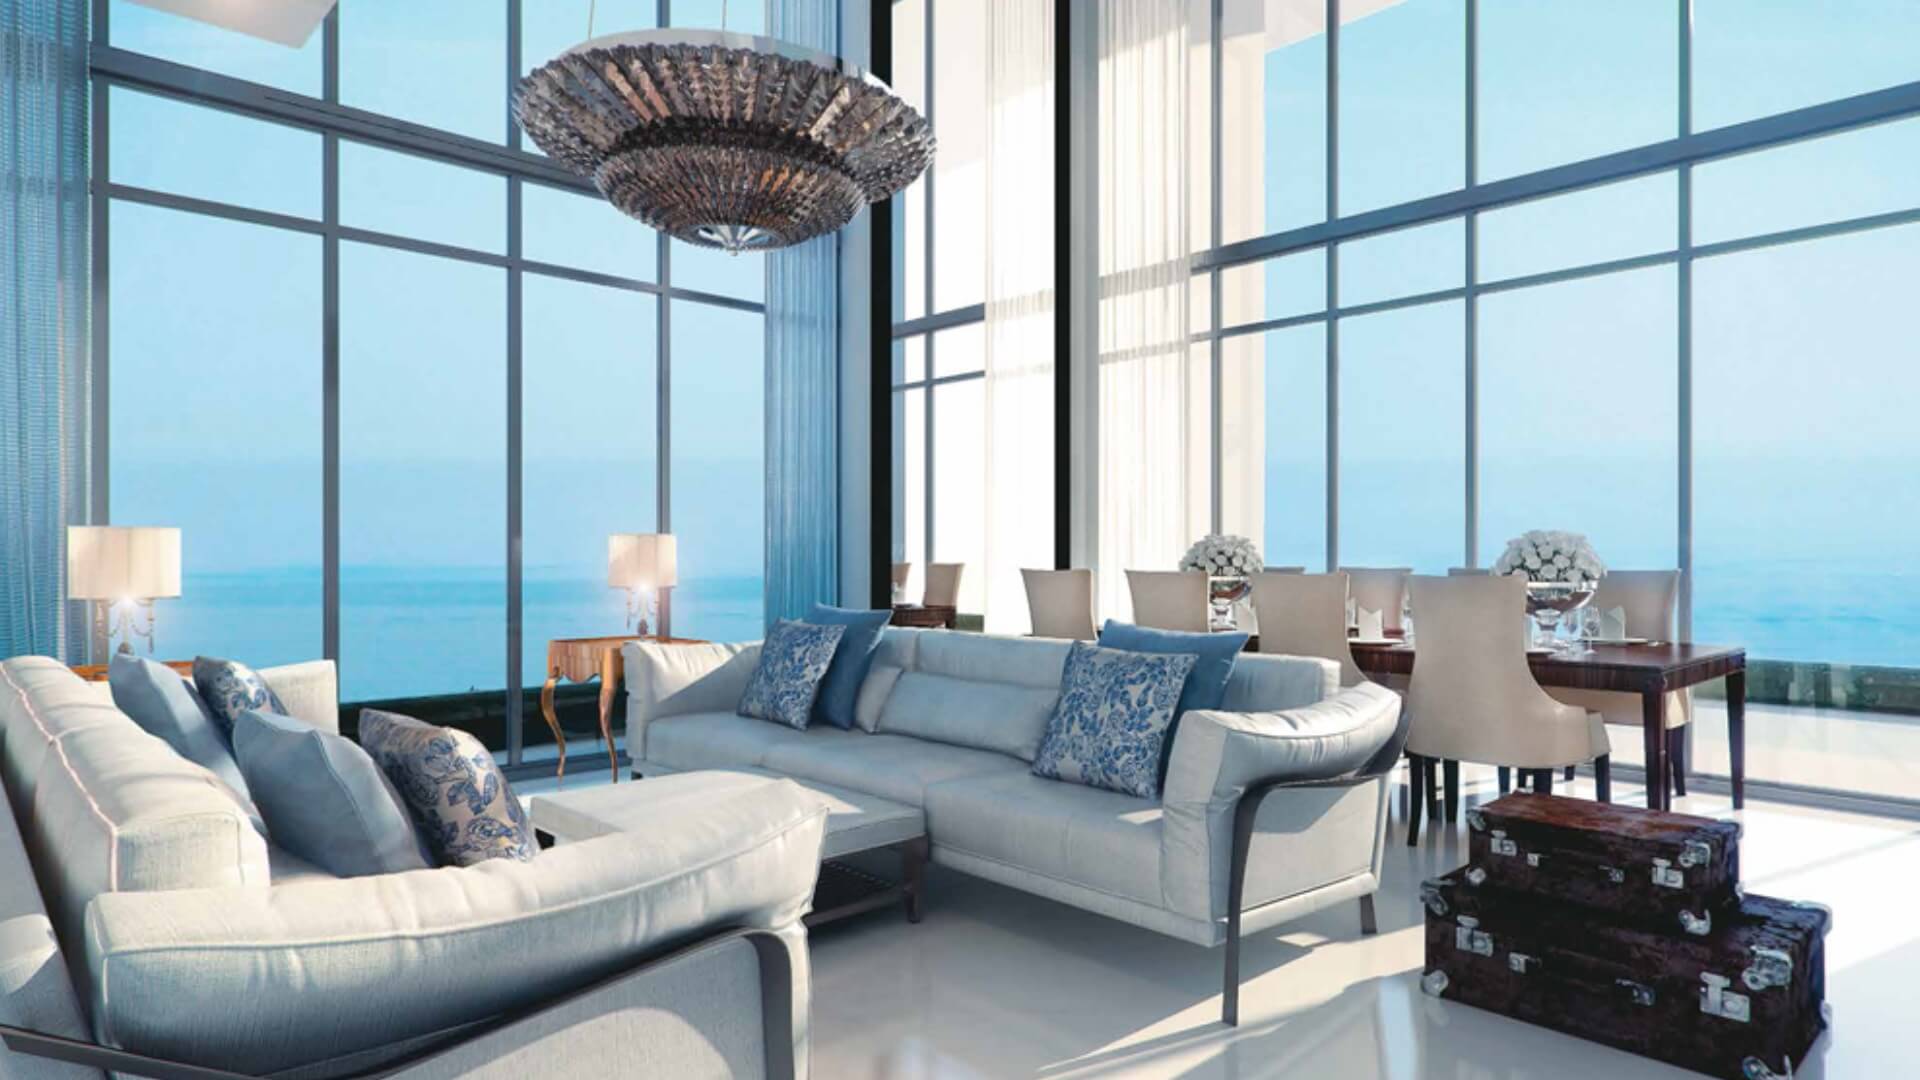 Apartment for sale in Maritime City, Dubai, UAE, 1 bedroom, 93 m², No. 24961 – photo 5